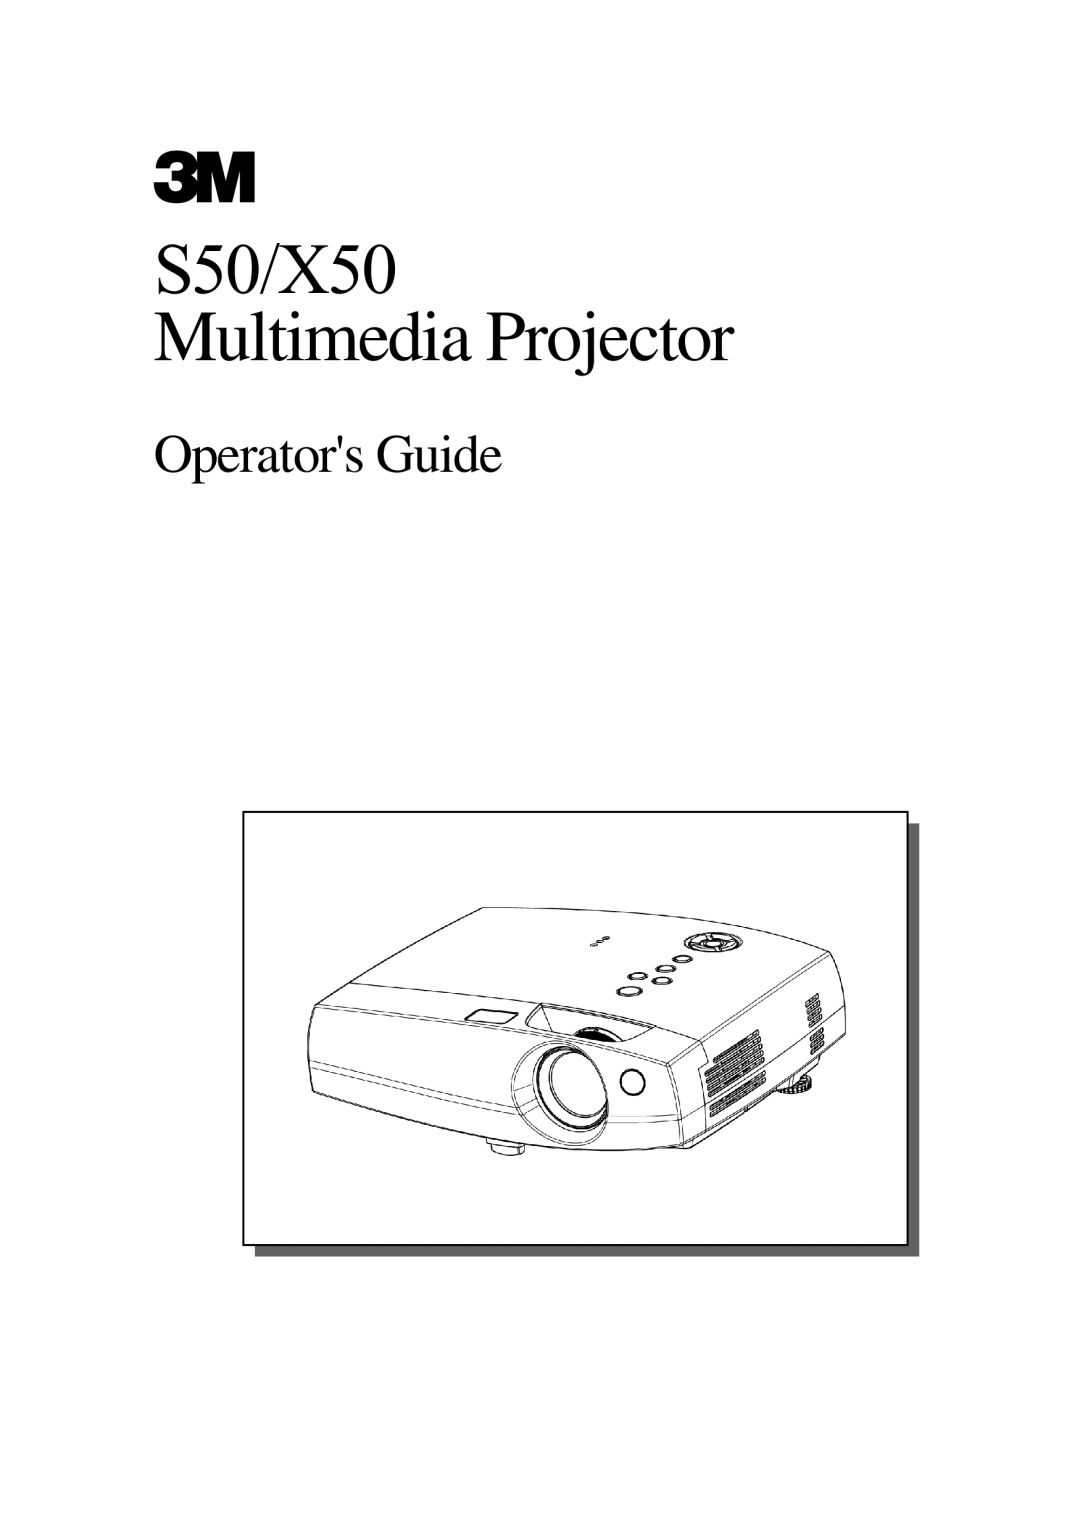 ViewSonic manual S50/X50 Multimedia Projector, Operators Guide 